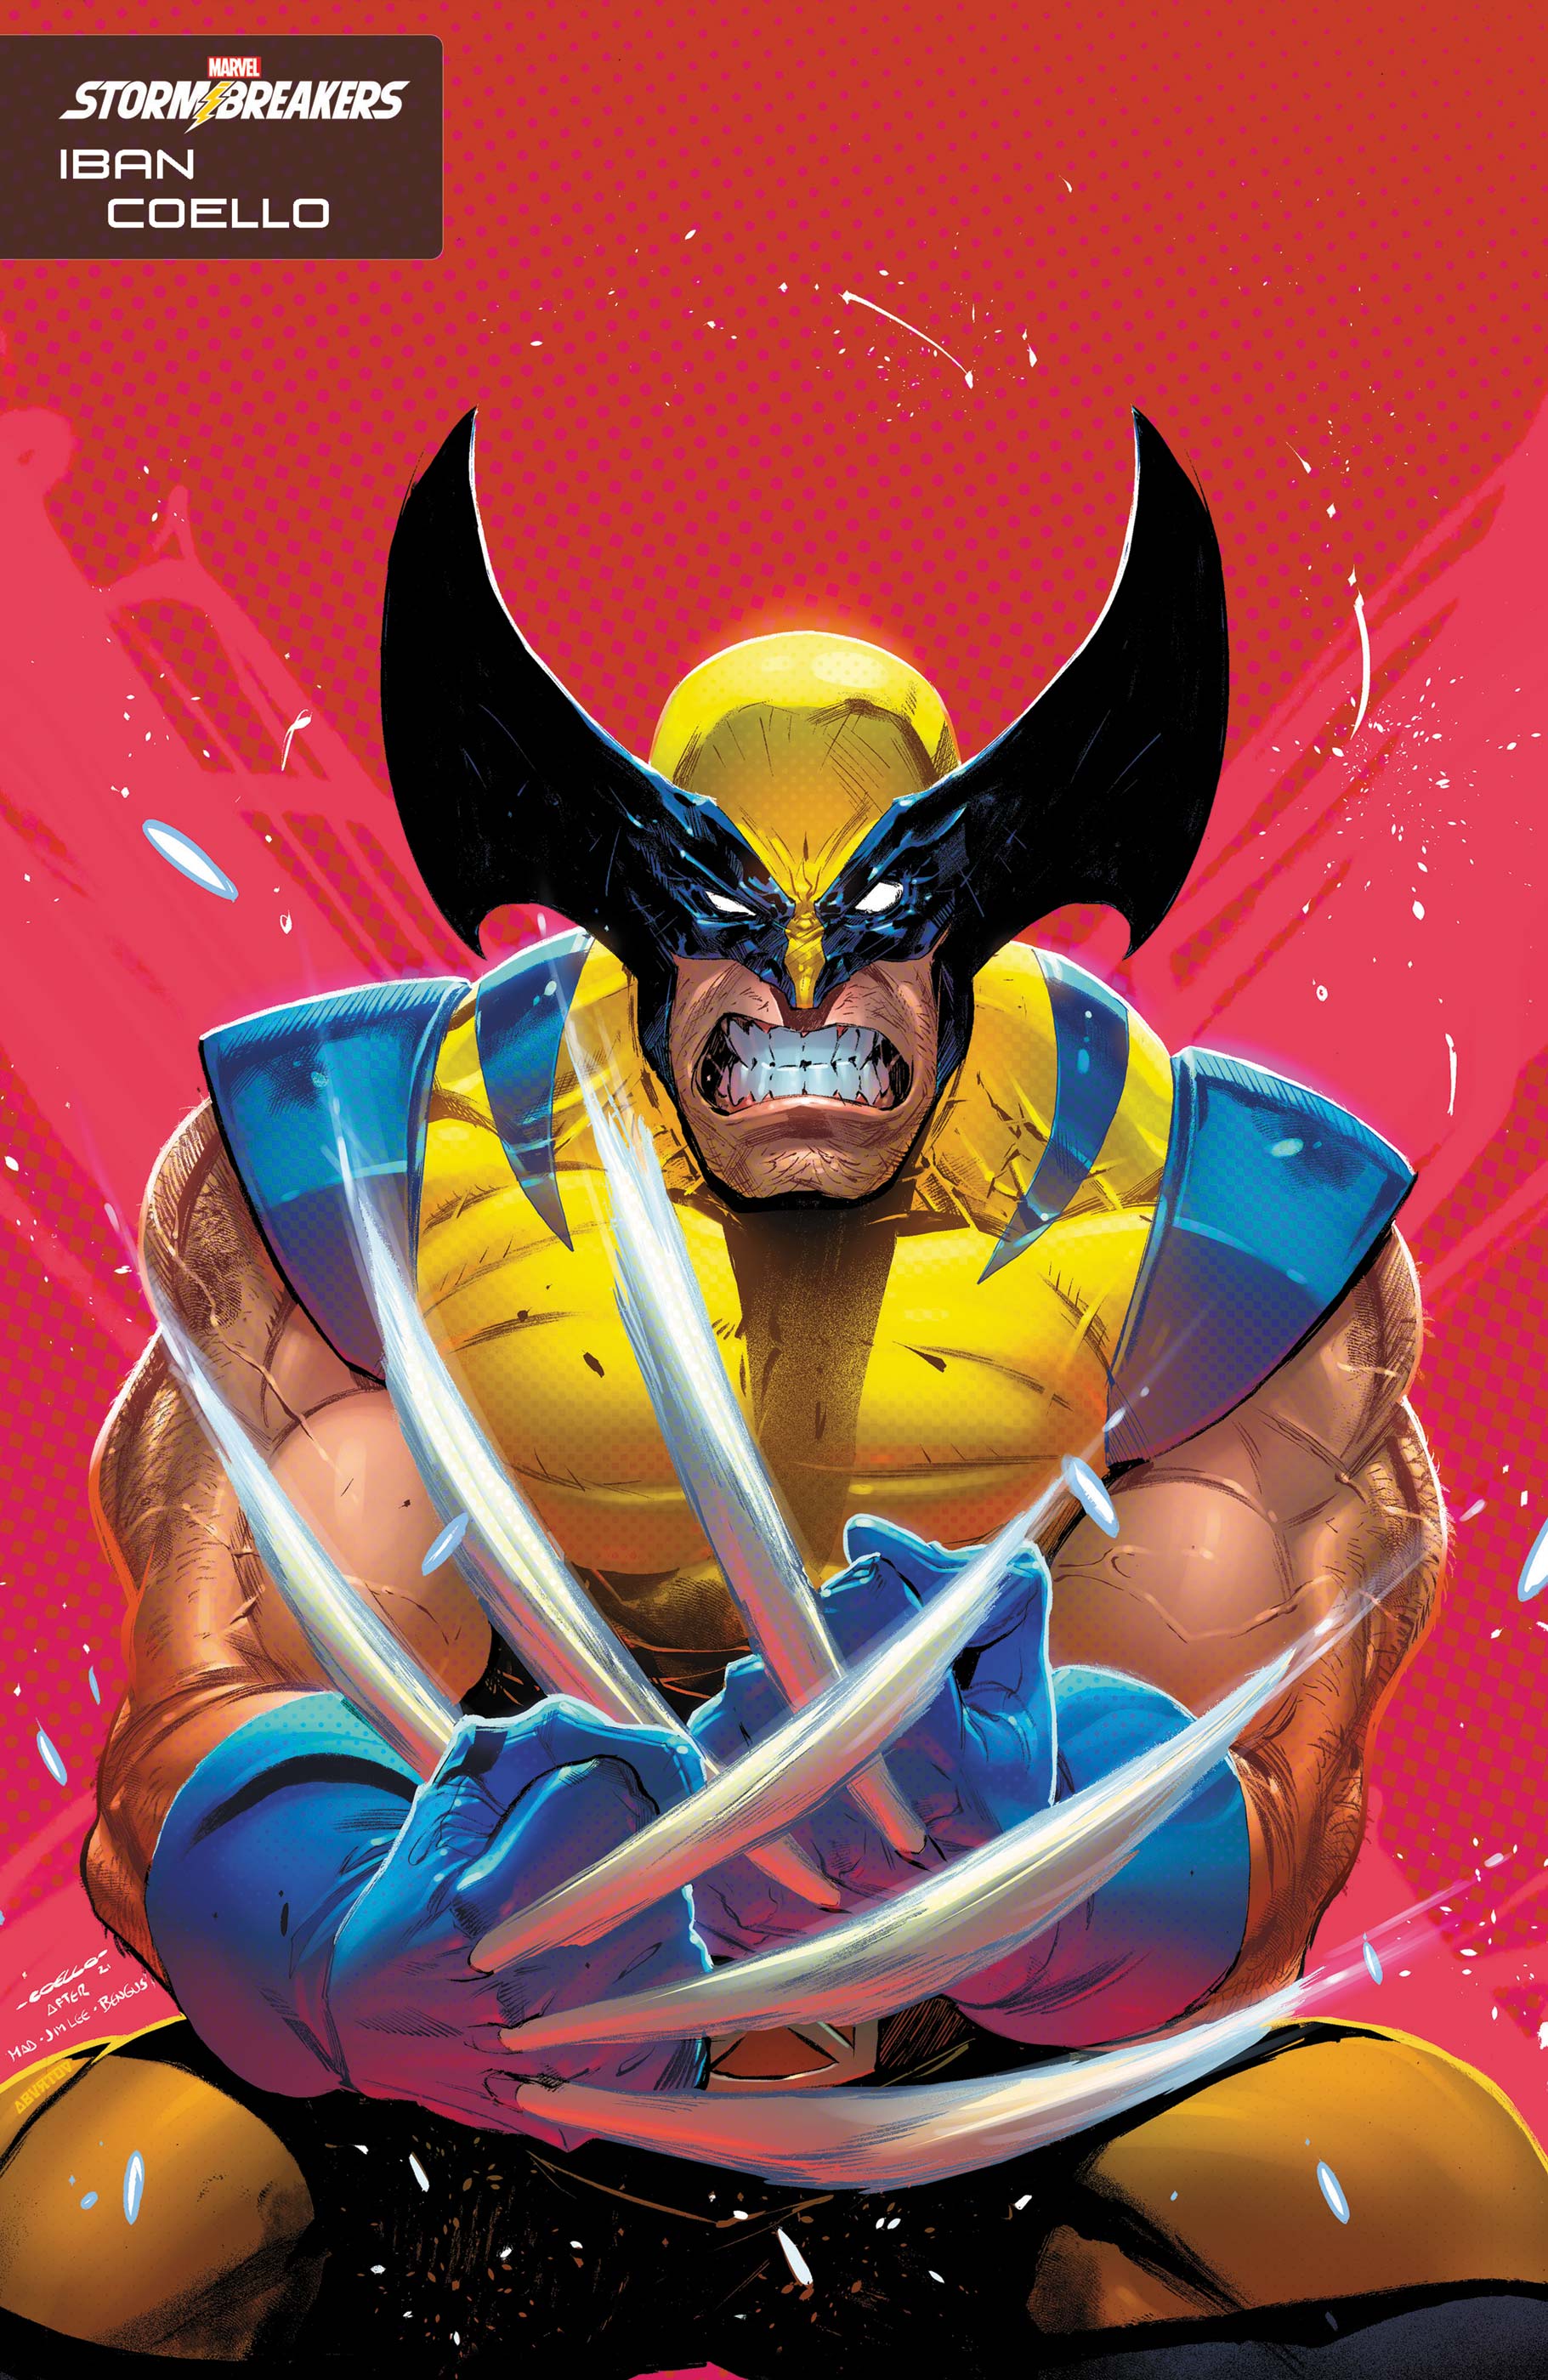 X Lives of Wolverine (2022) #2 (Variant)